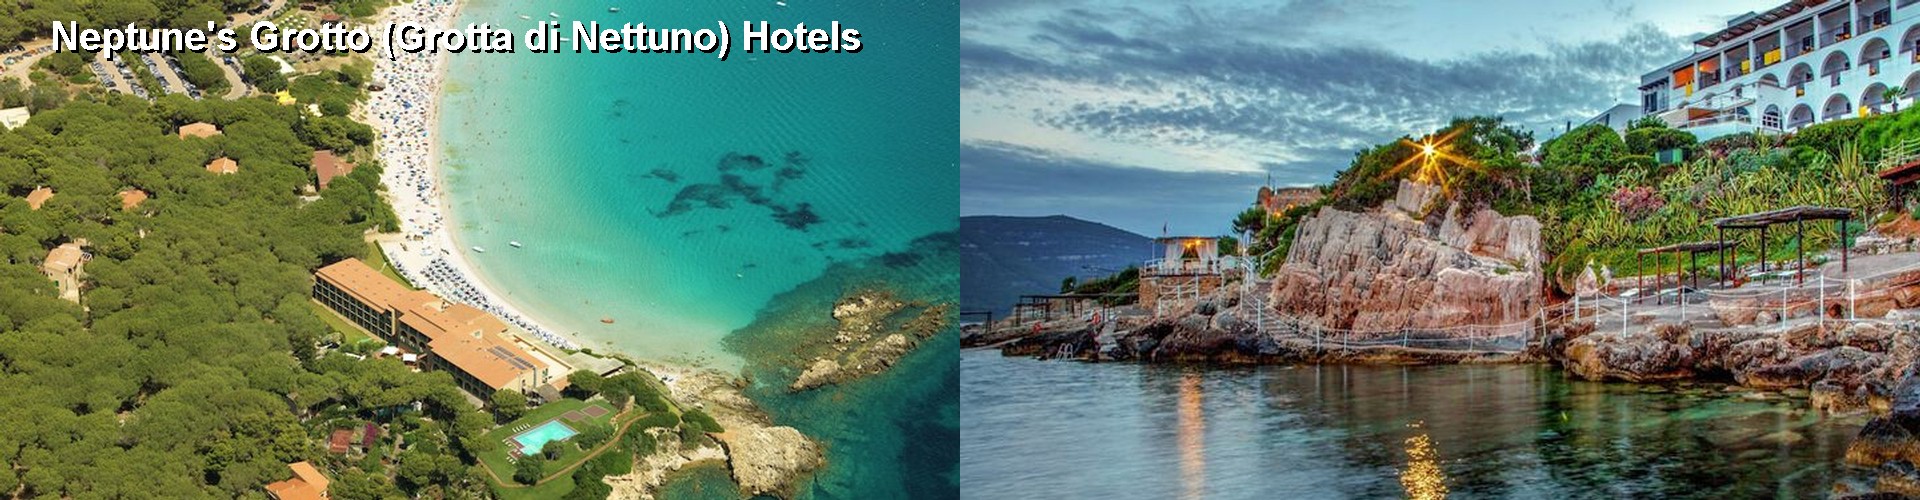 5 Best Hotels near Neptune's Grotto (Grotta di Nettuno)